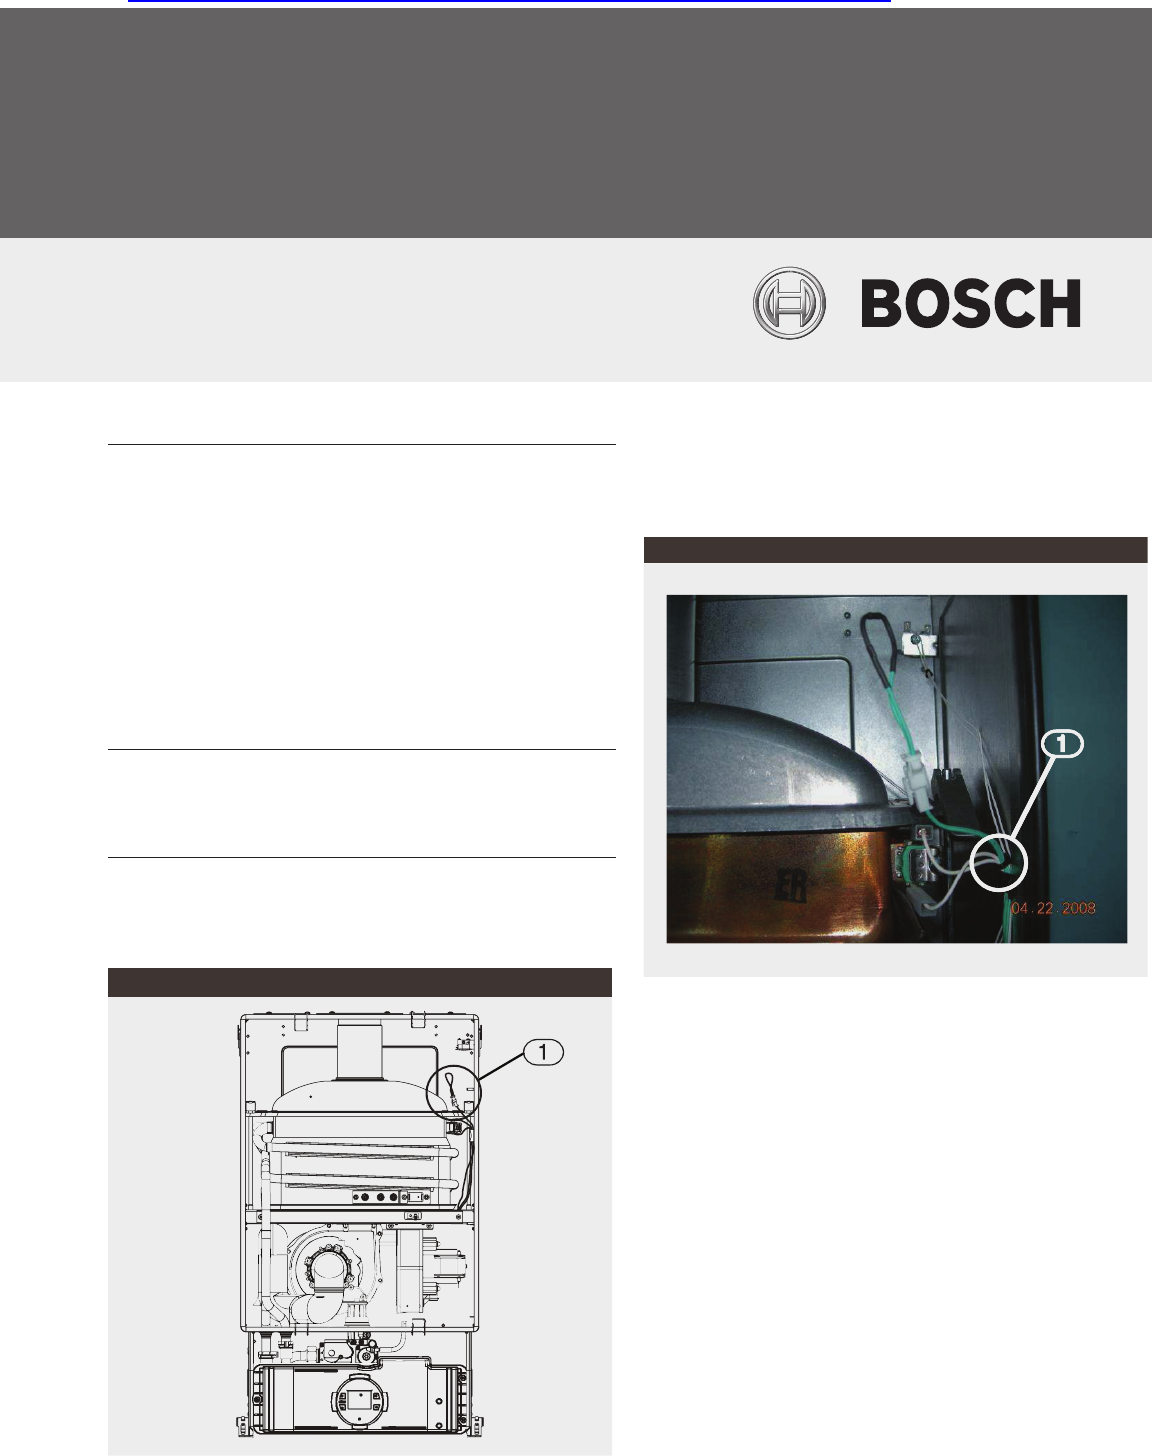 Bosch A3 E3 Error Code Troubleshooting